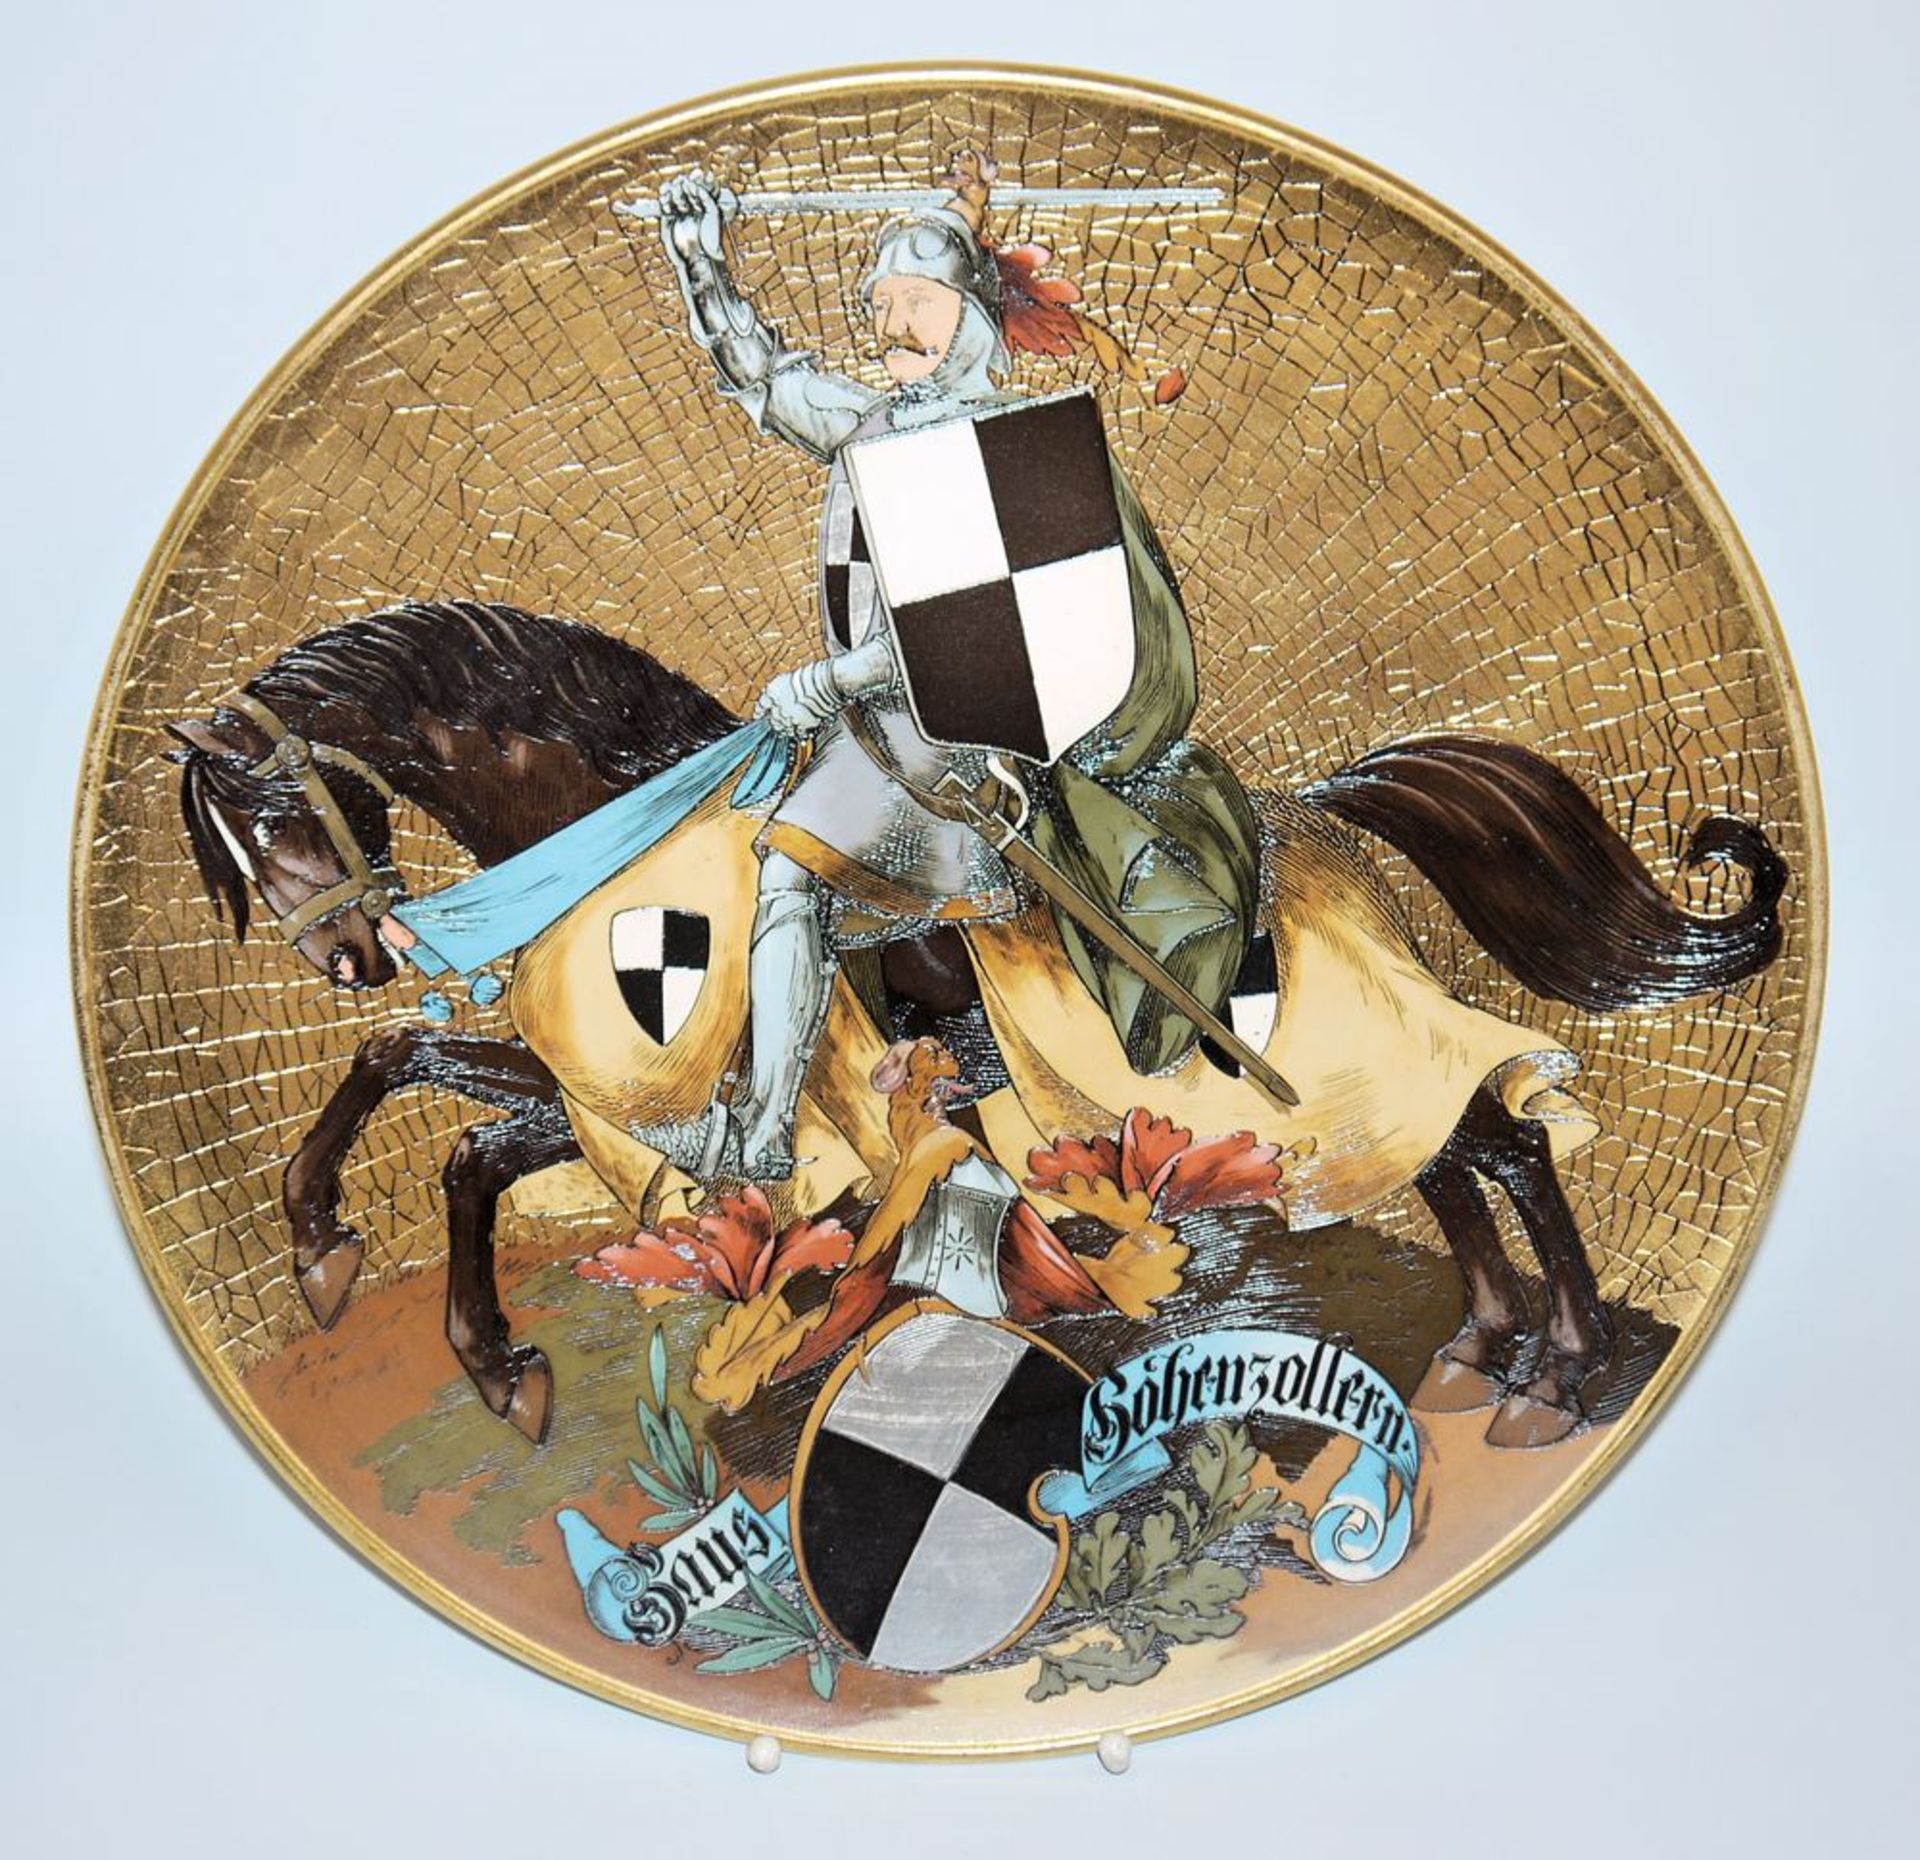 Decorative plate "Haus Hohenzollern" by Villeroy & Boch, Mettlach 1896